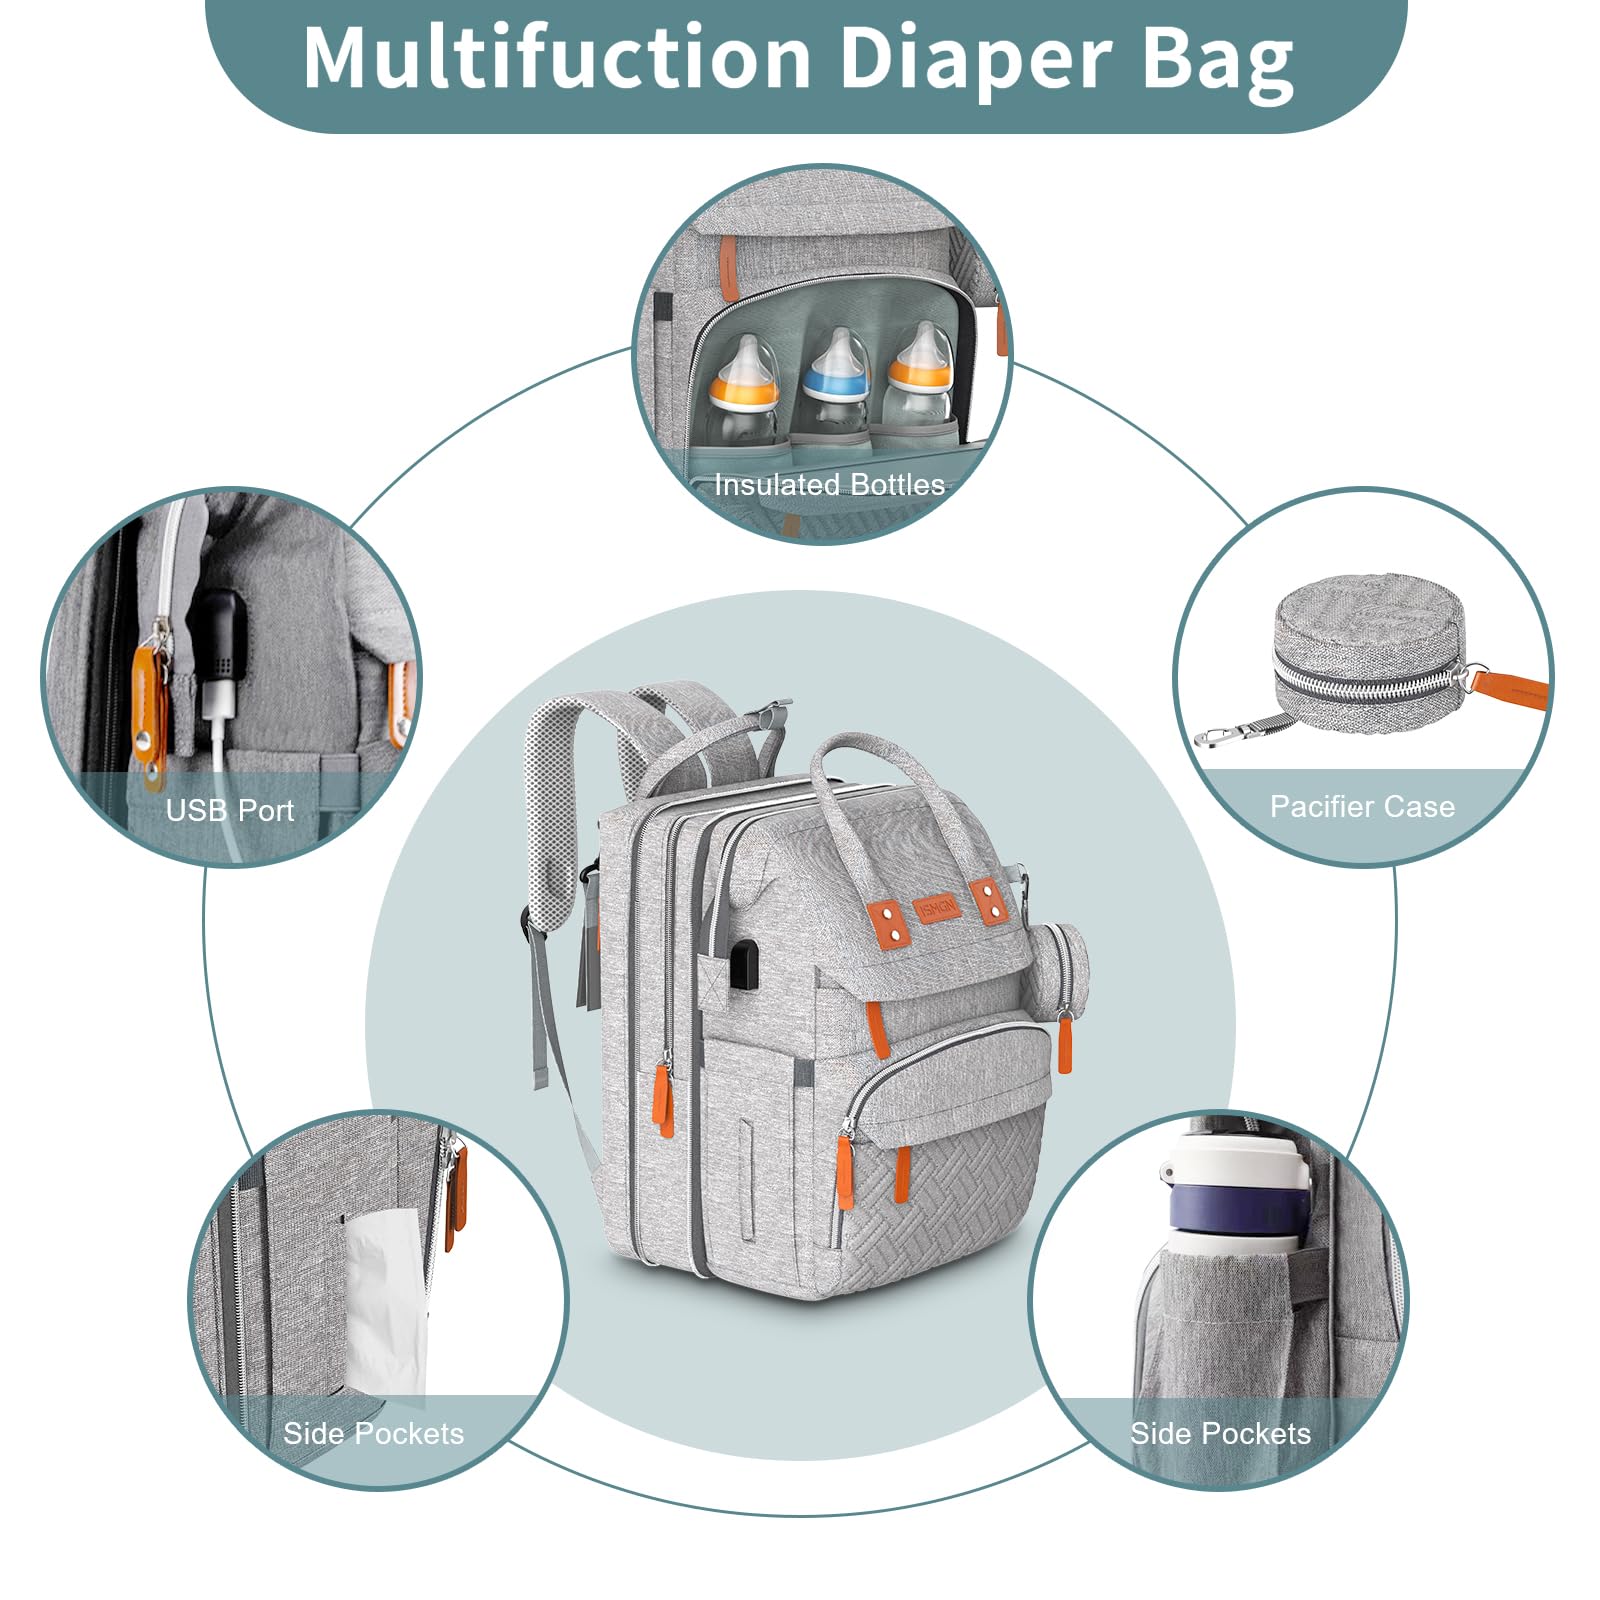 ISMGN Diaper Bag Backpack, Multifunctional Diaper Bag, Extra Large Diaper Bag, Expandable Diaper Bag, UG Grey